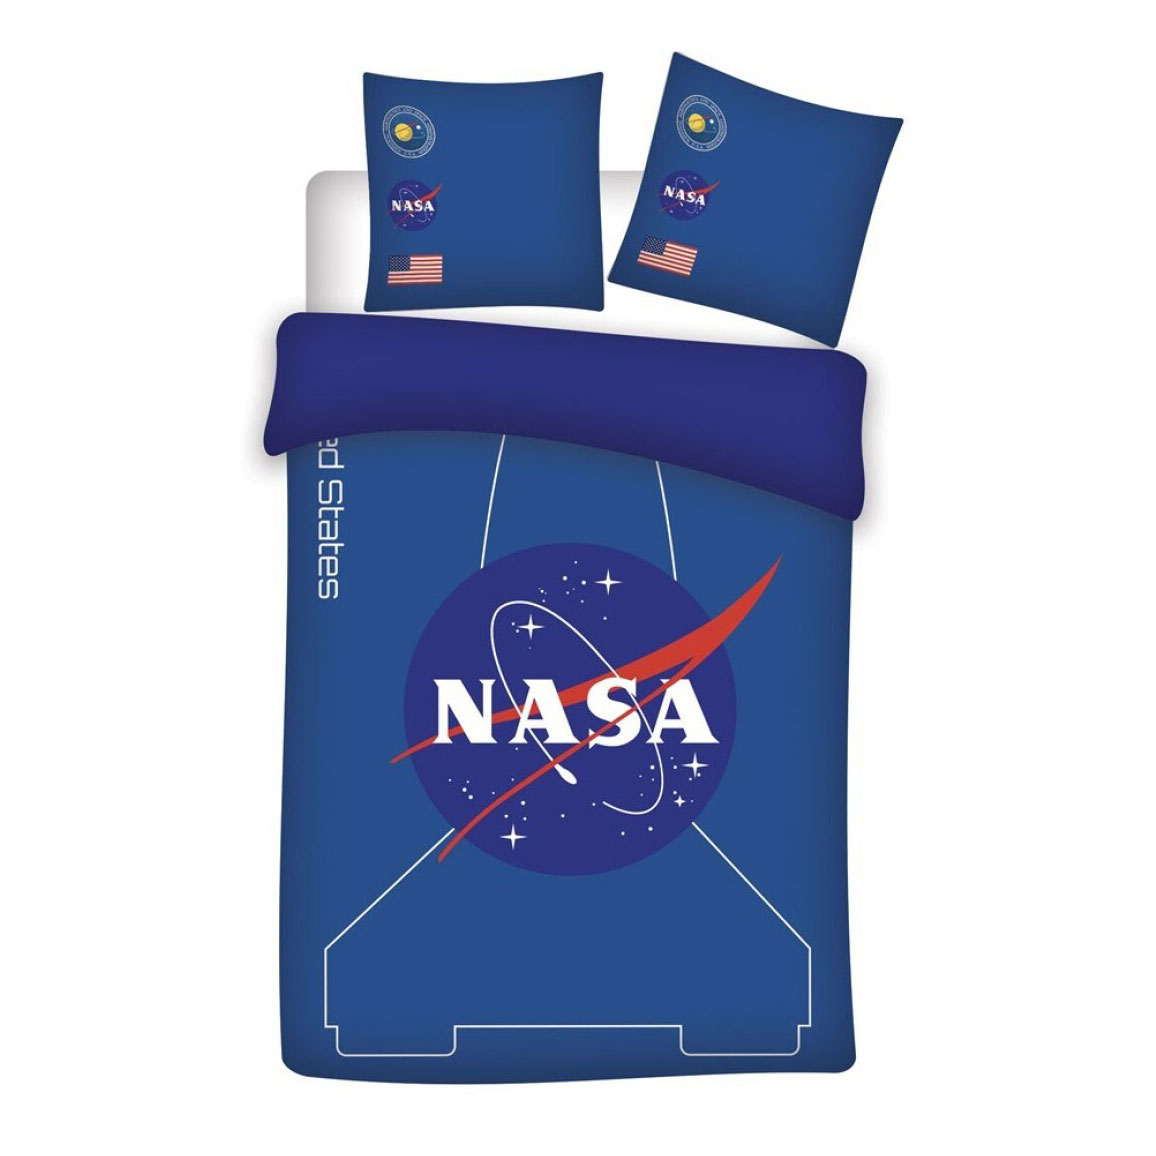 Kinderbettbezug NASA Aerospace, 140x200cm